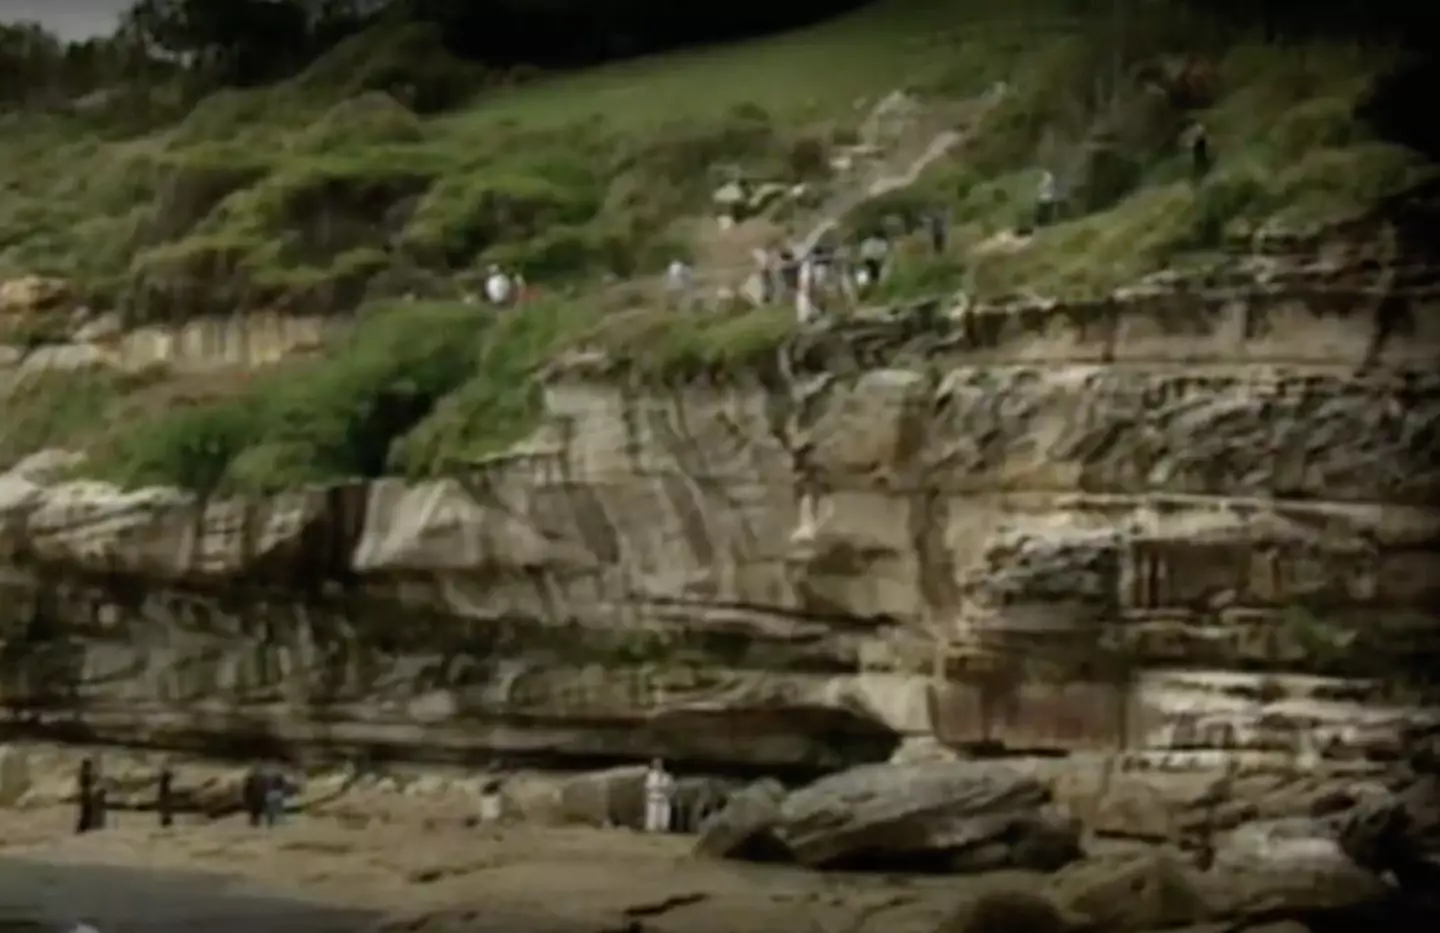 The cliffs in 1988 were Johnson was killed.